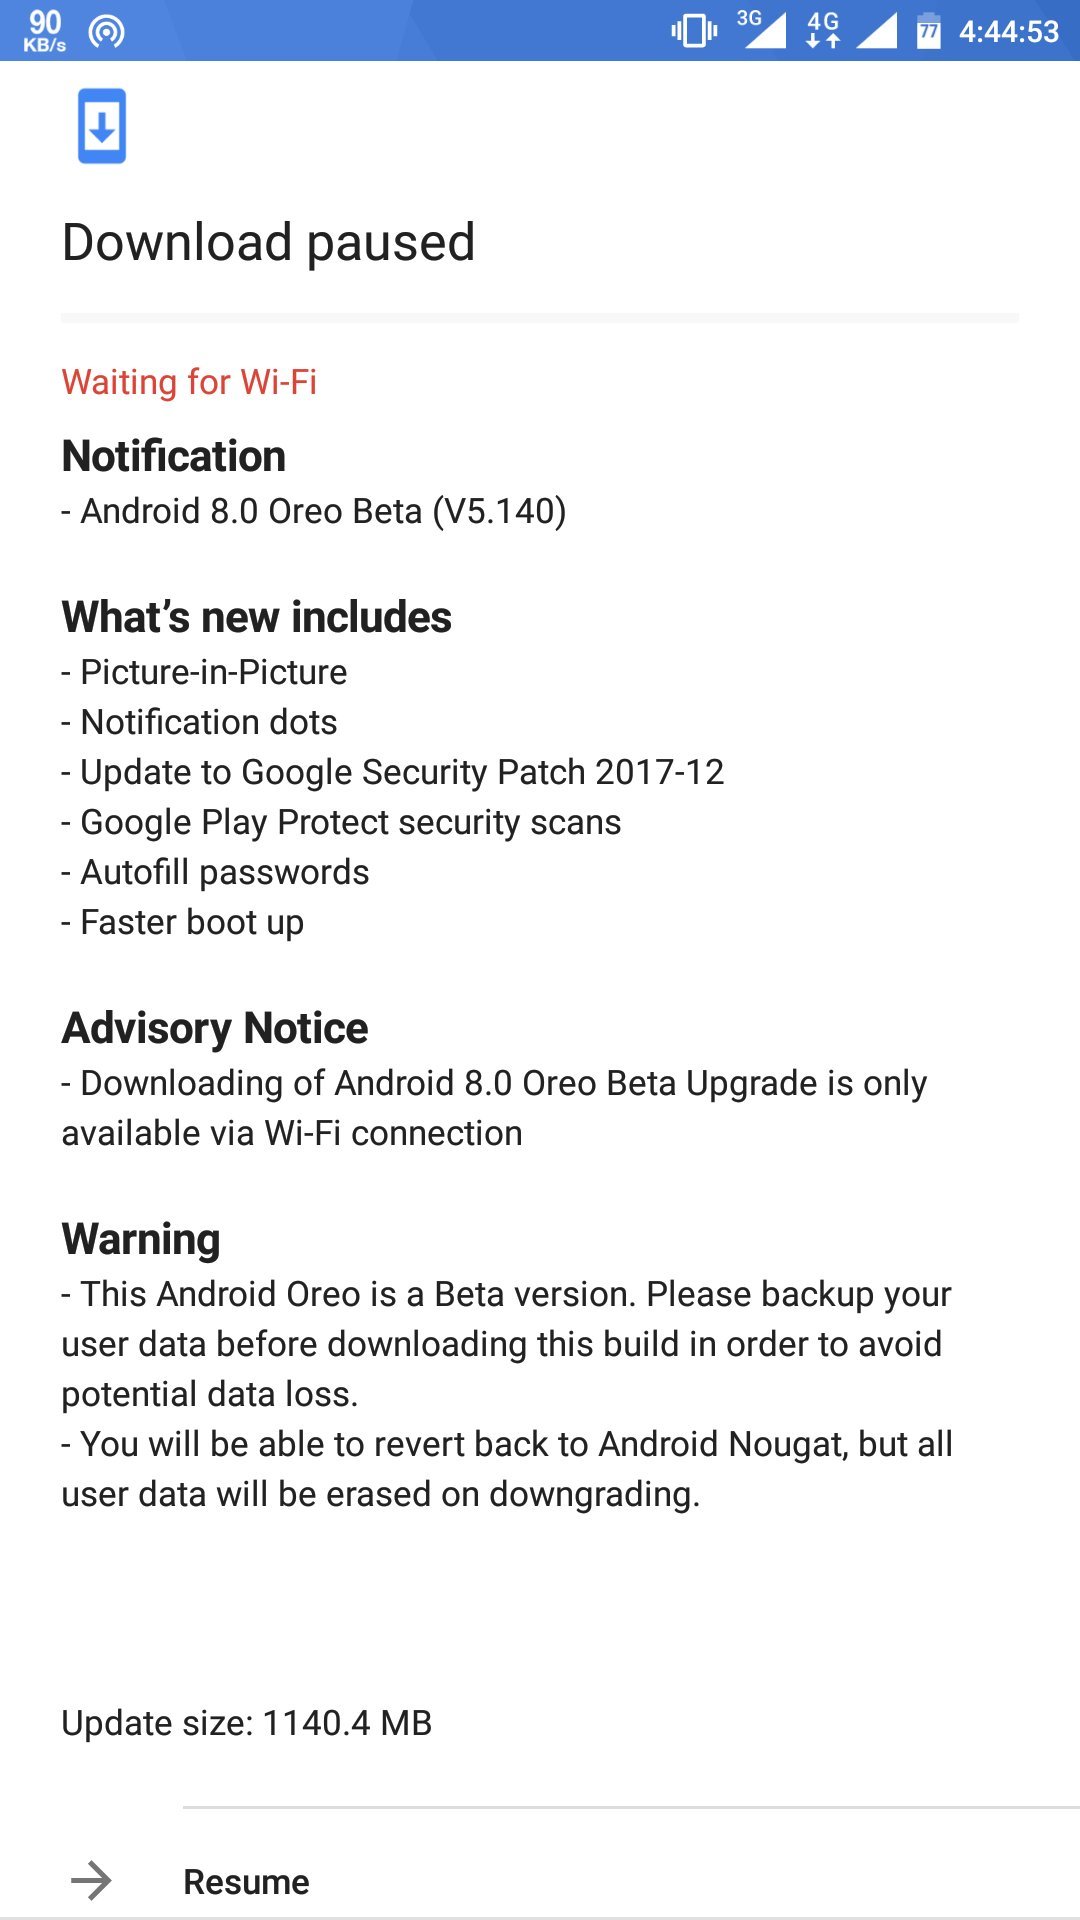 Nokia 6 Android 8.0 Oreo update notification